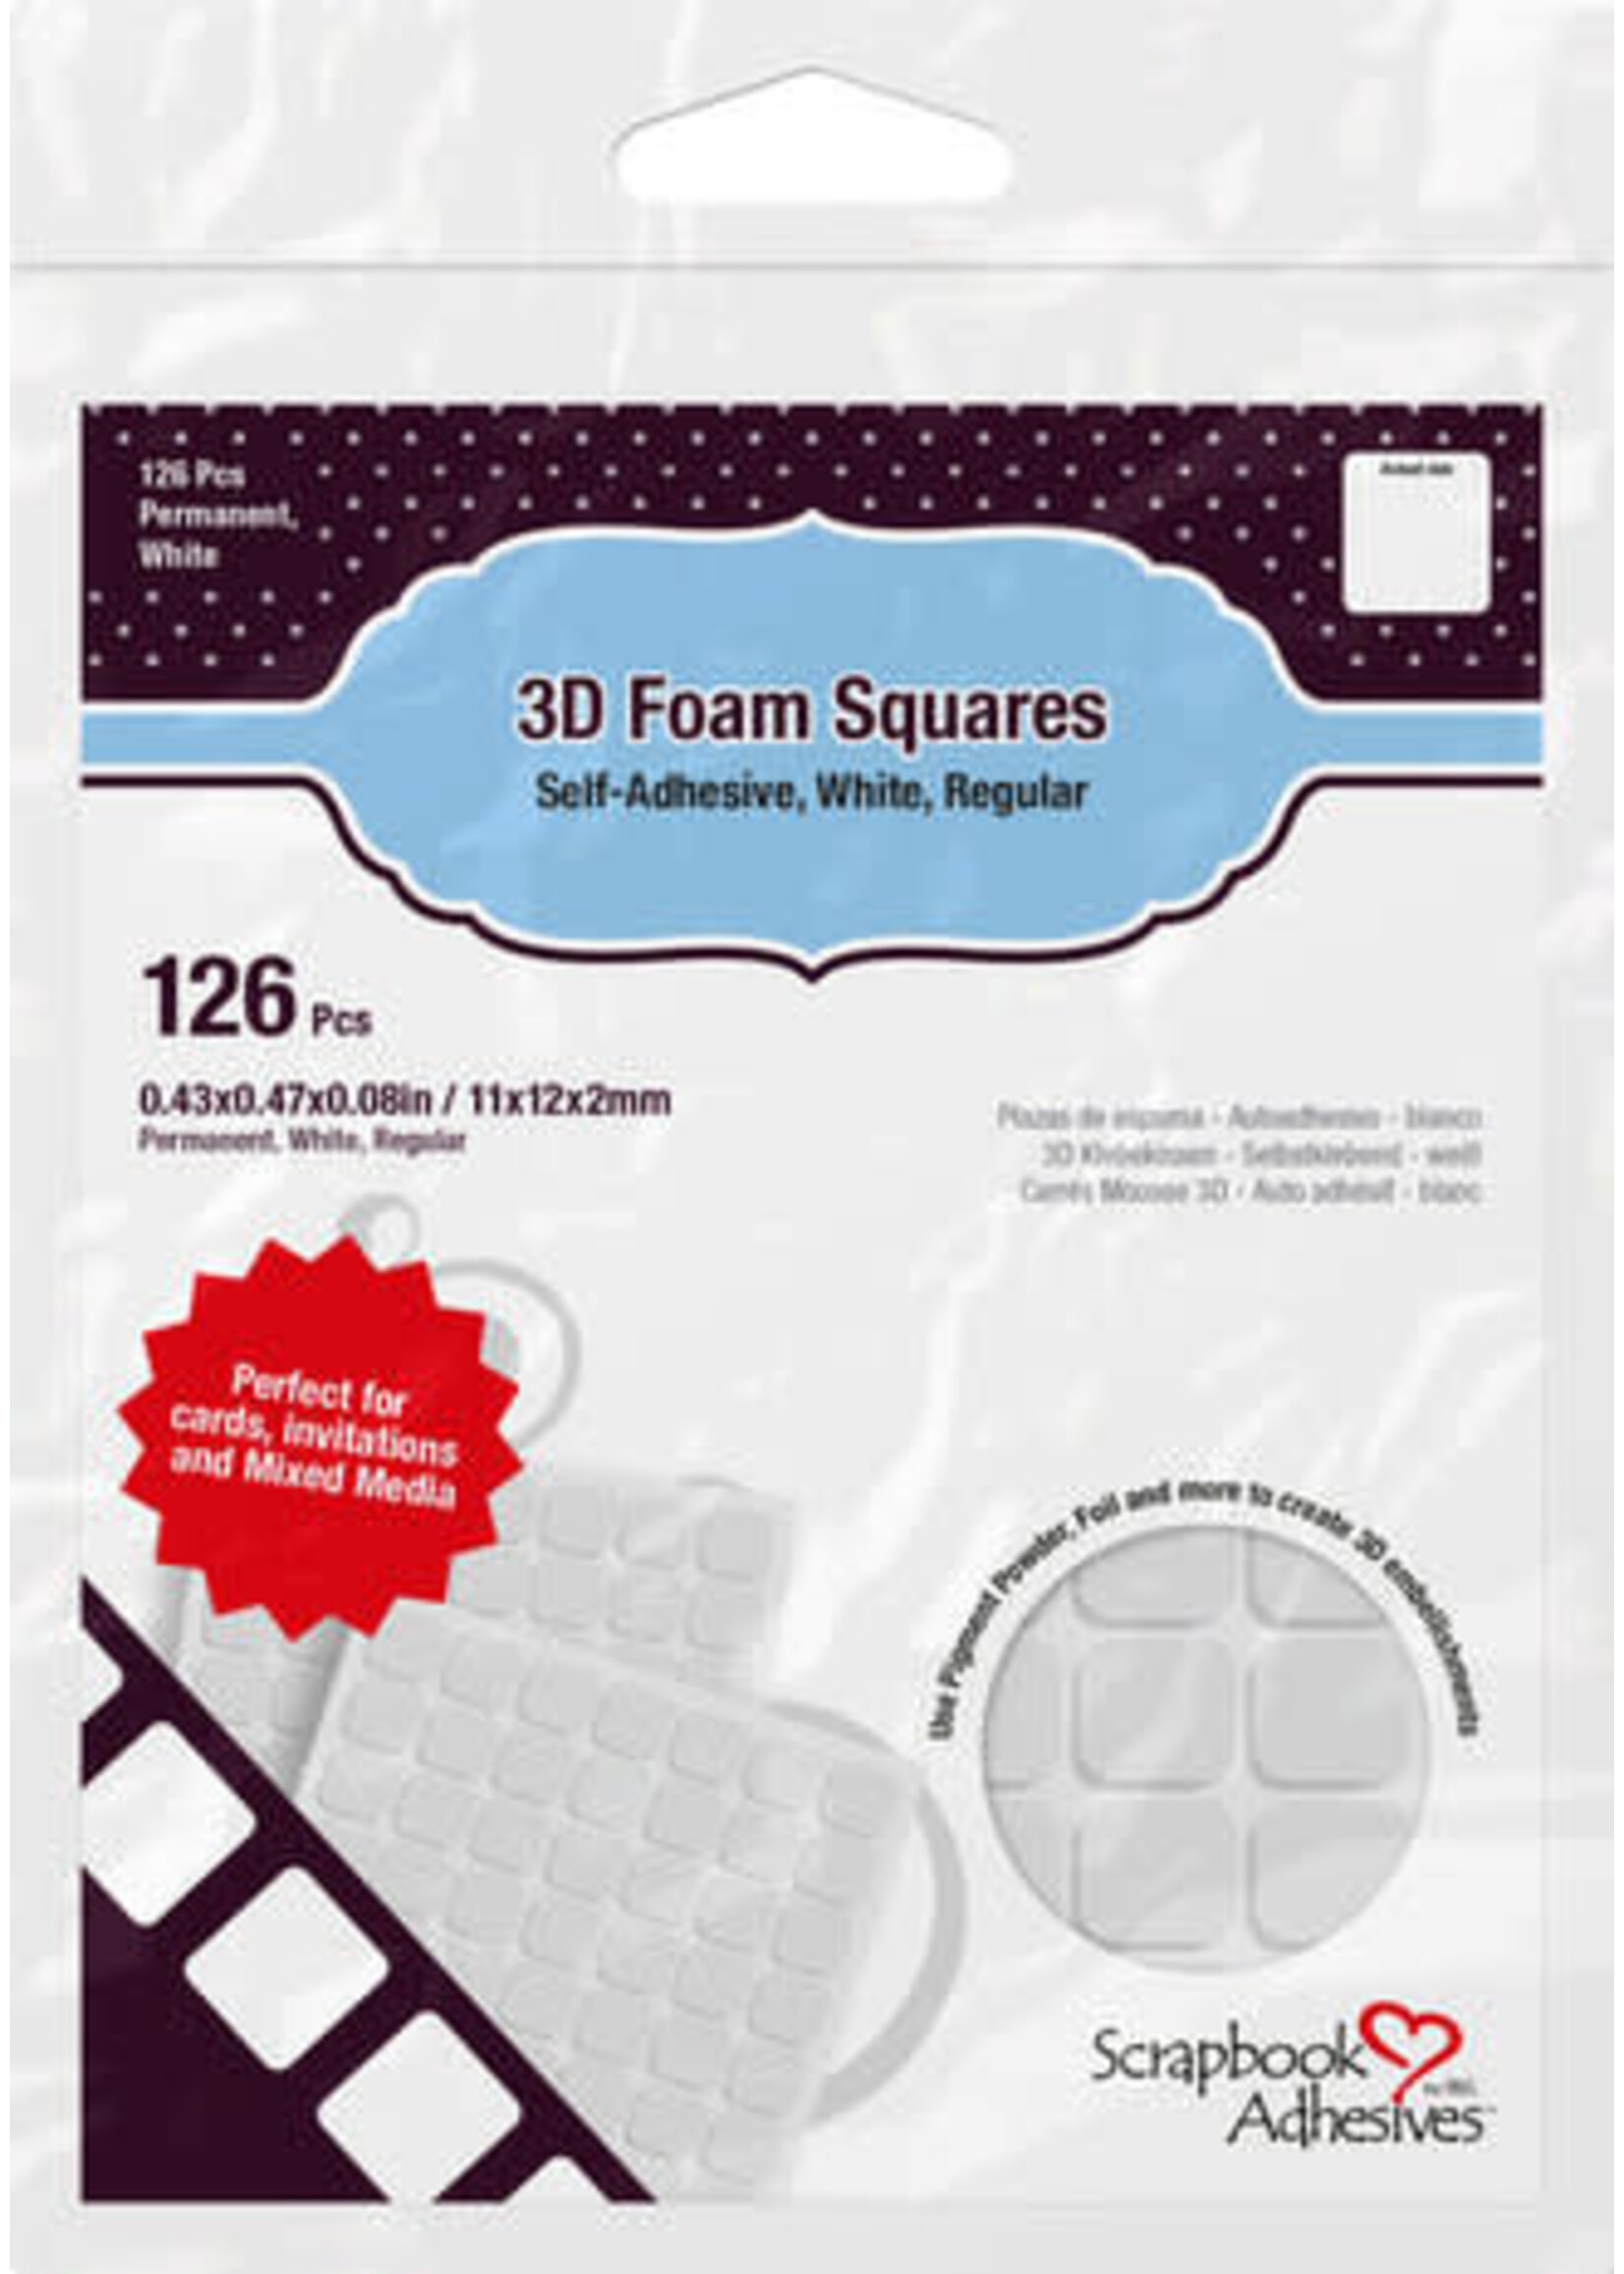 Scrapbook Adhesives 3D Foam Squares White Regular (126pcs) (01610)